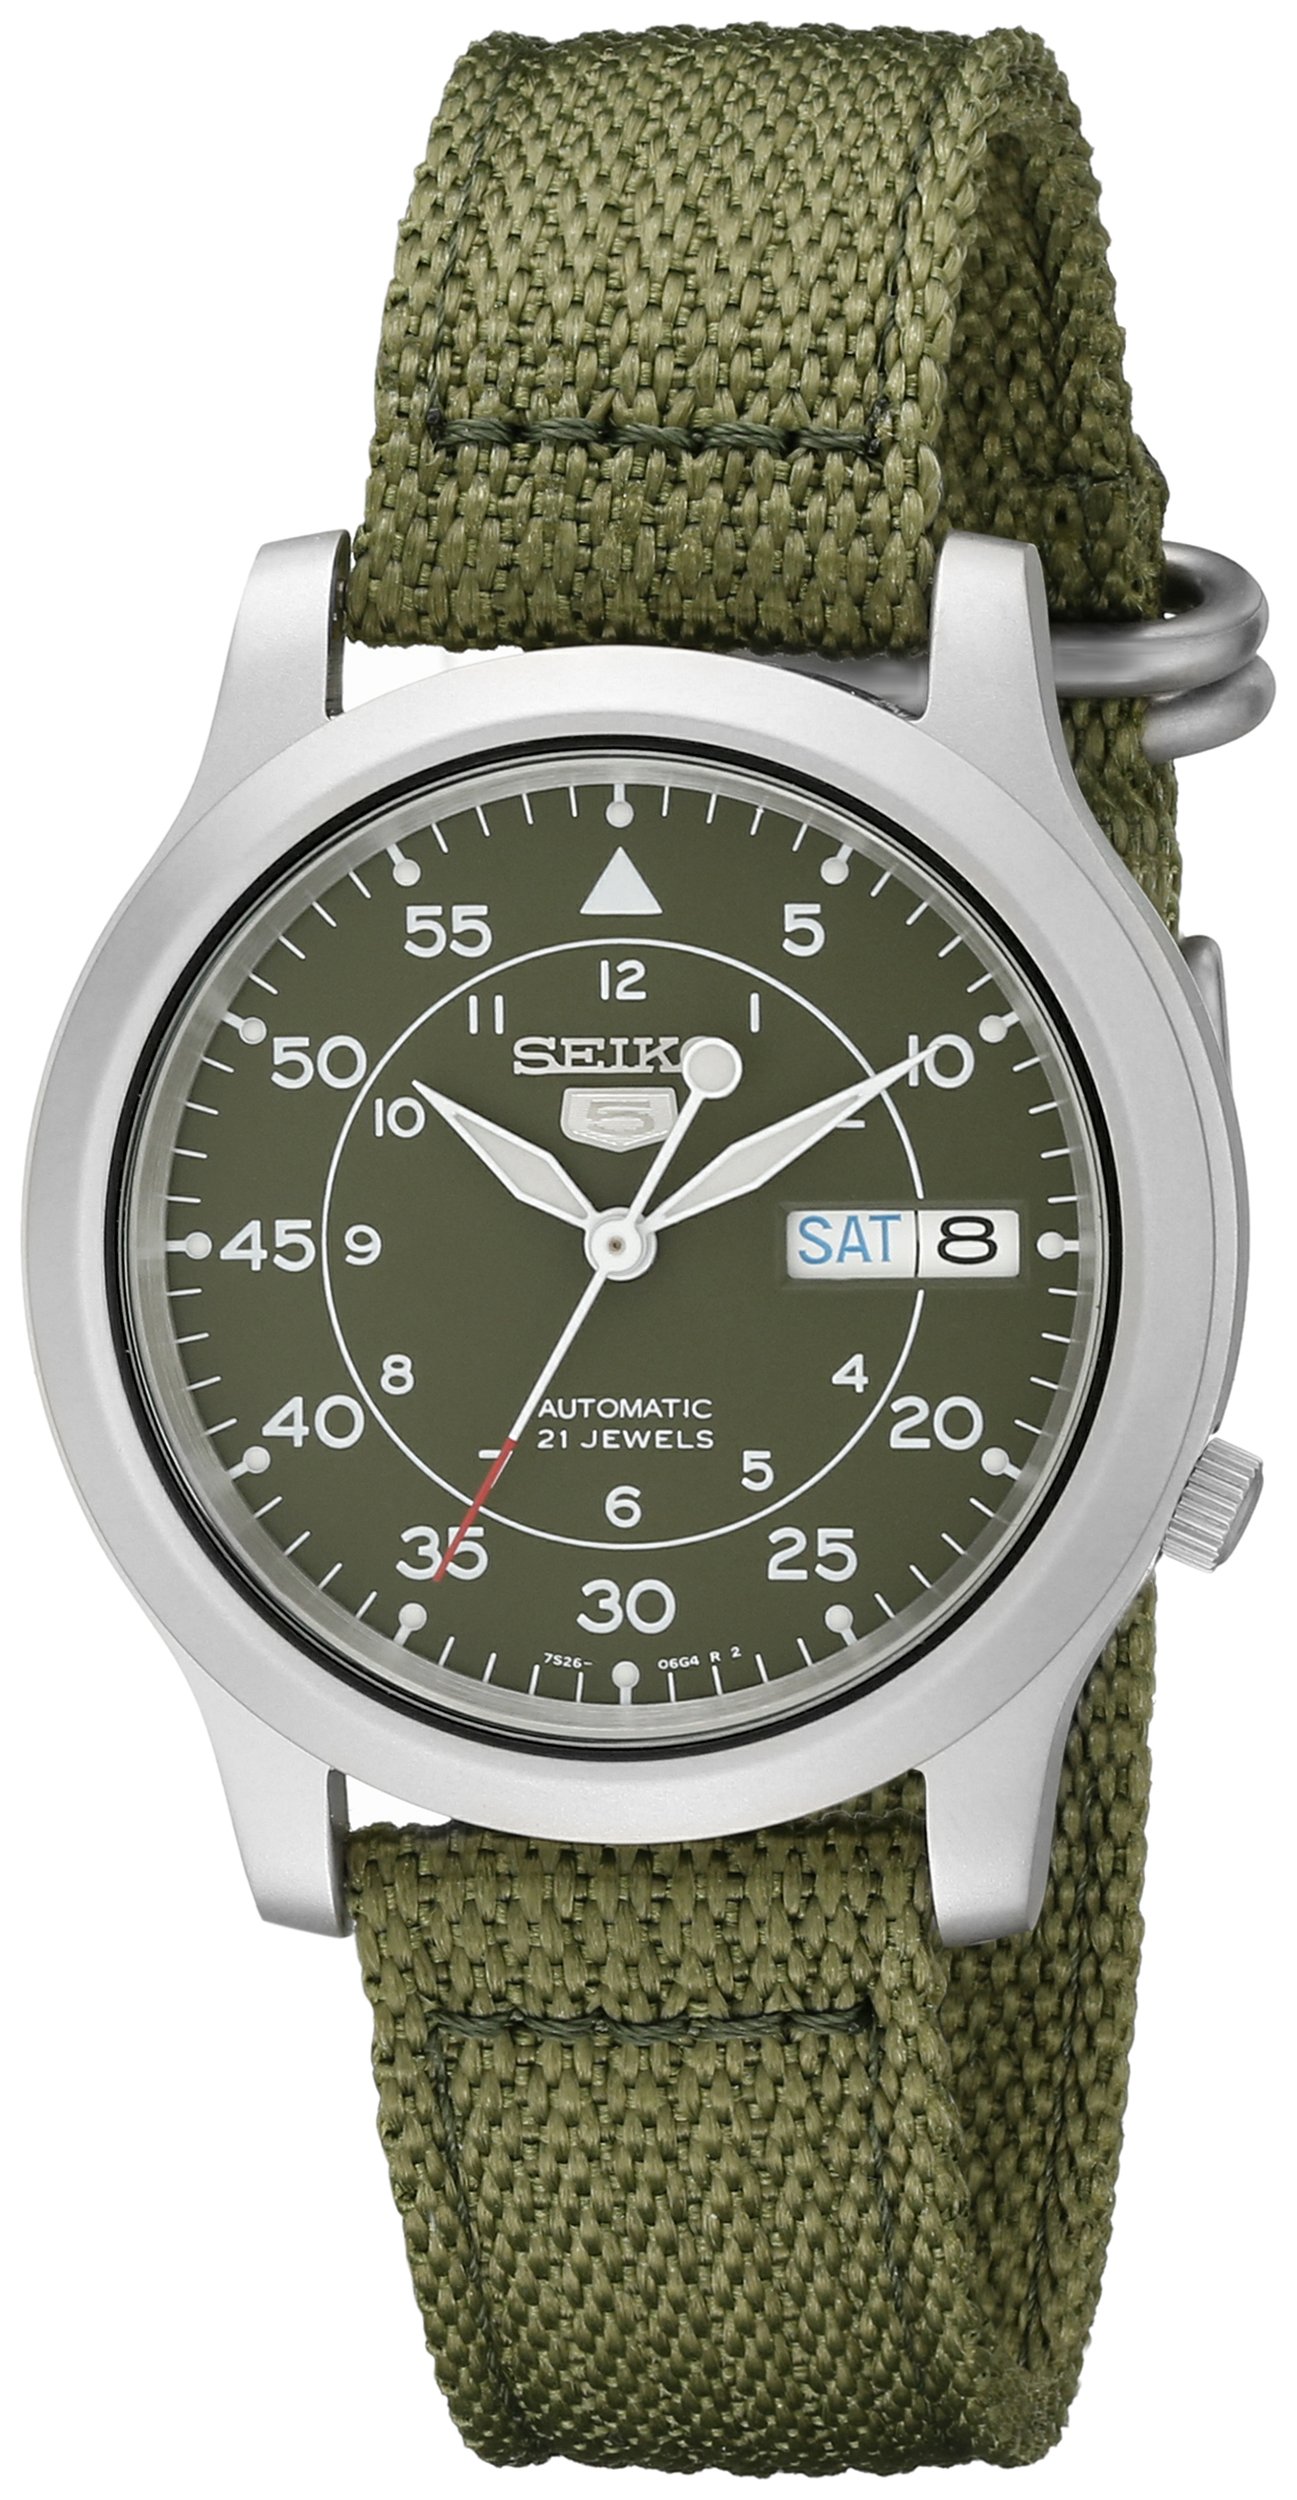 Introducir 58+ imagen seiko army automatic watch